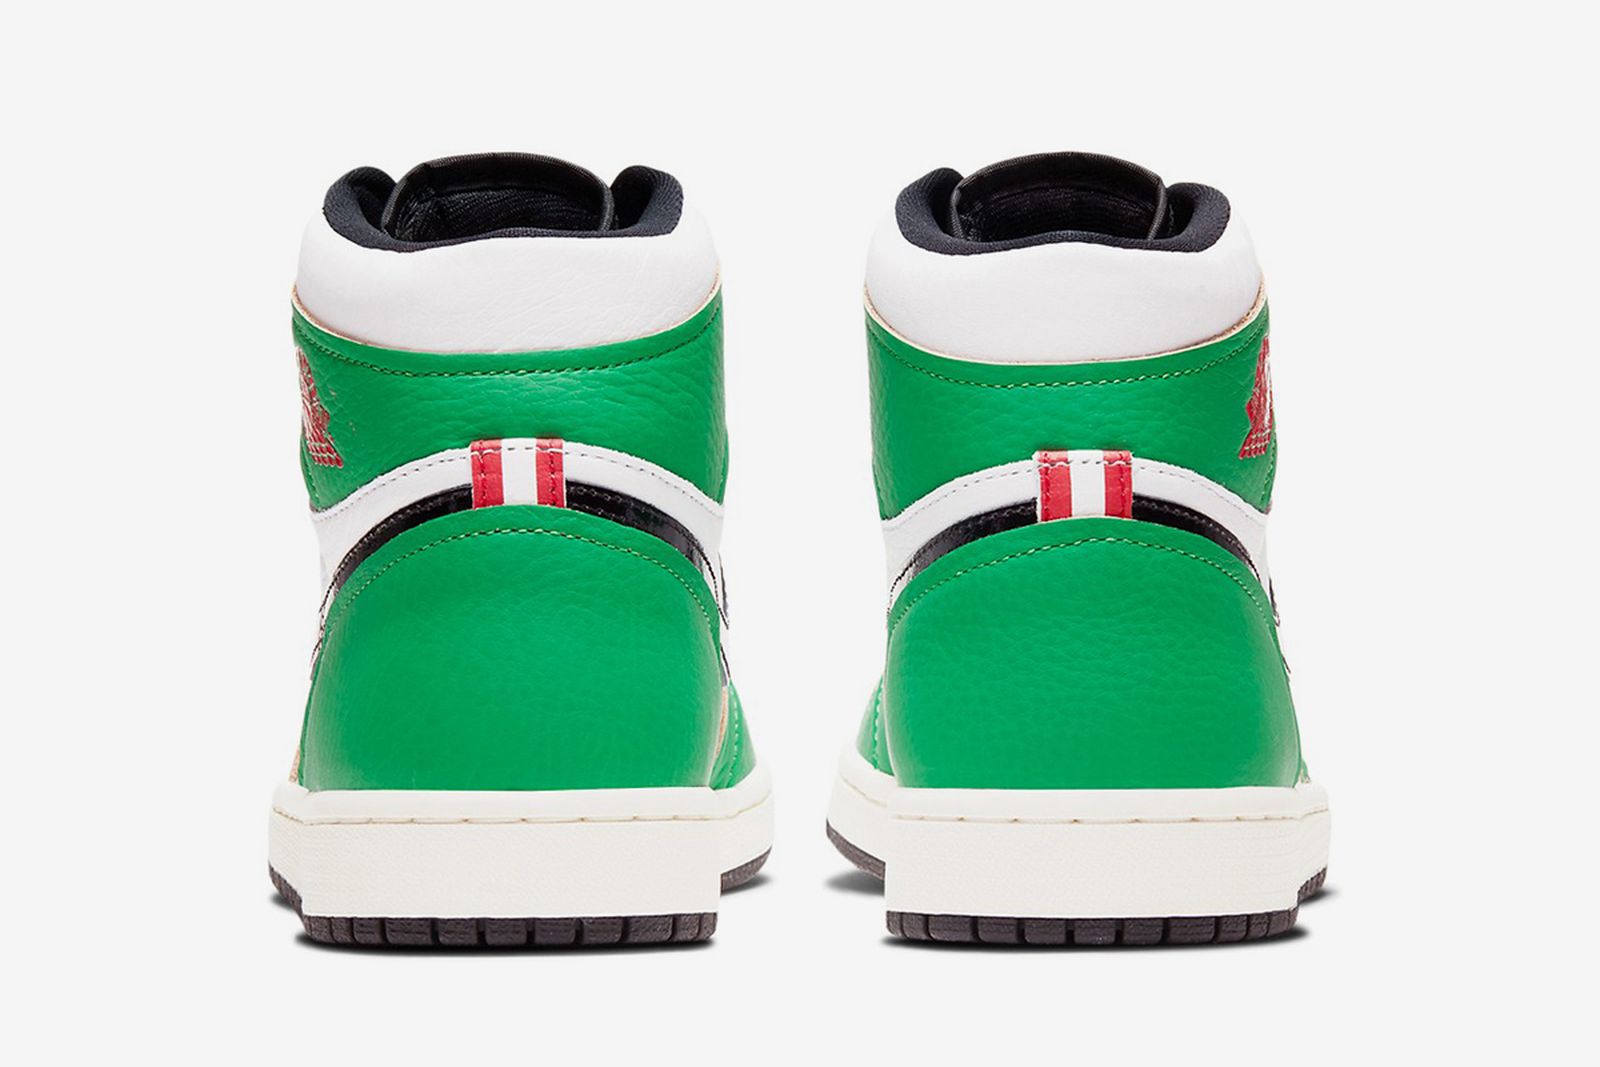 Air Jordan green and white jordan 1 1 "Lucky Green": Official Images & Release Info